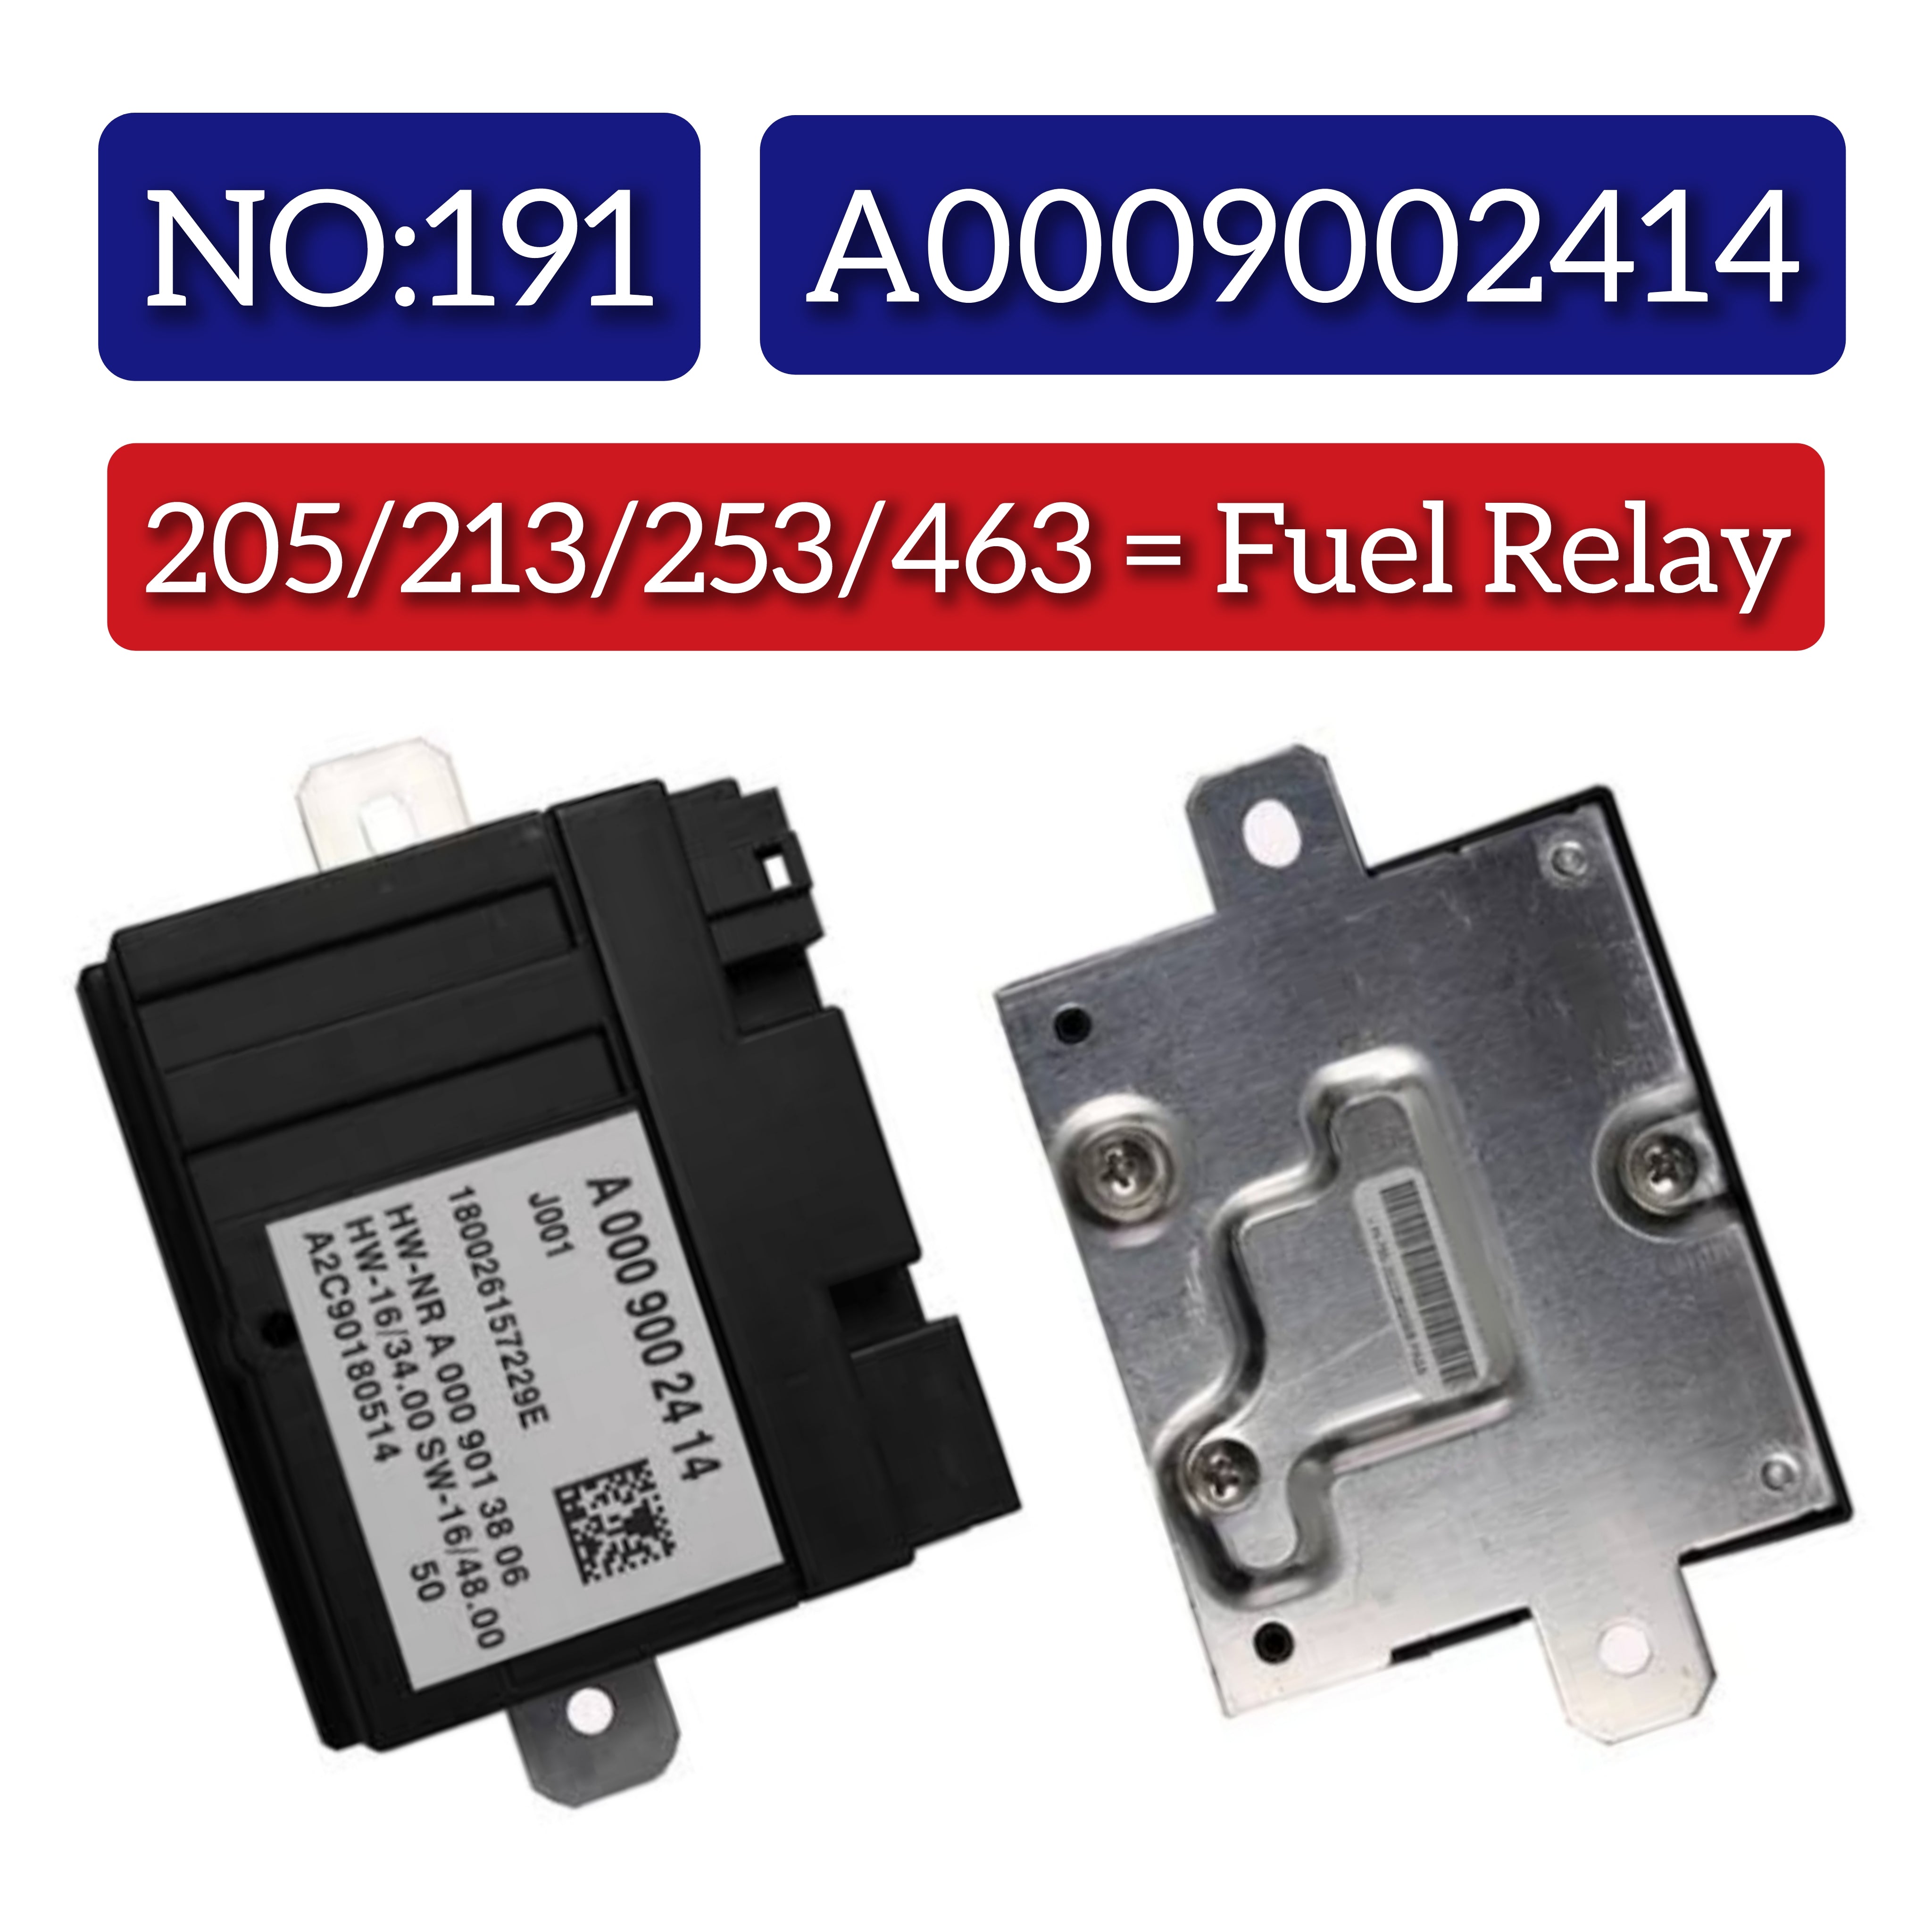 Fuel Pump Control Module A0009002414 For MERCEDES-BENZ C-CLASS W205 & E-CLASS W213 Tag-BL-191